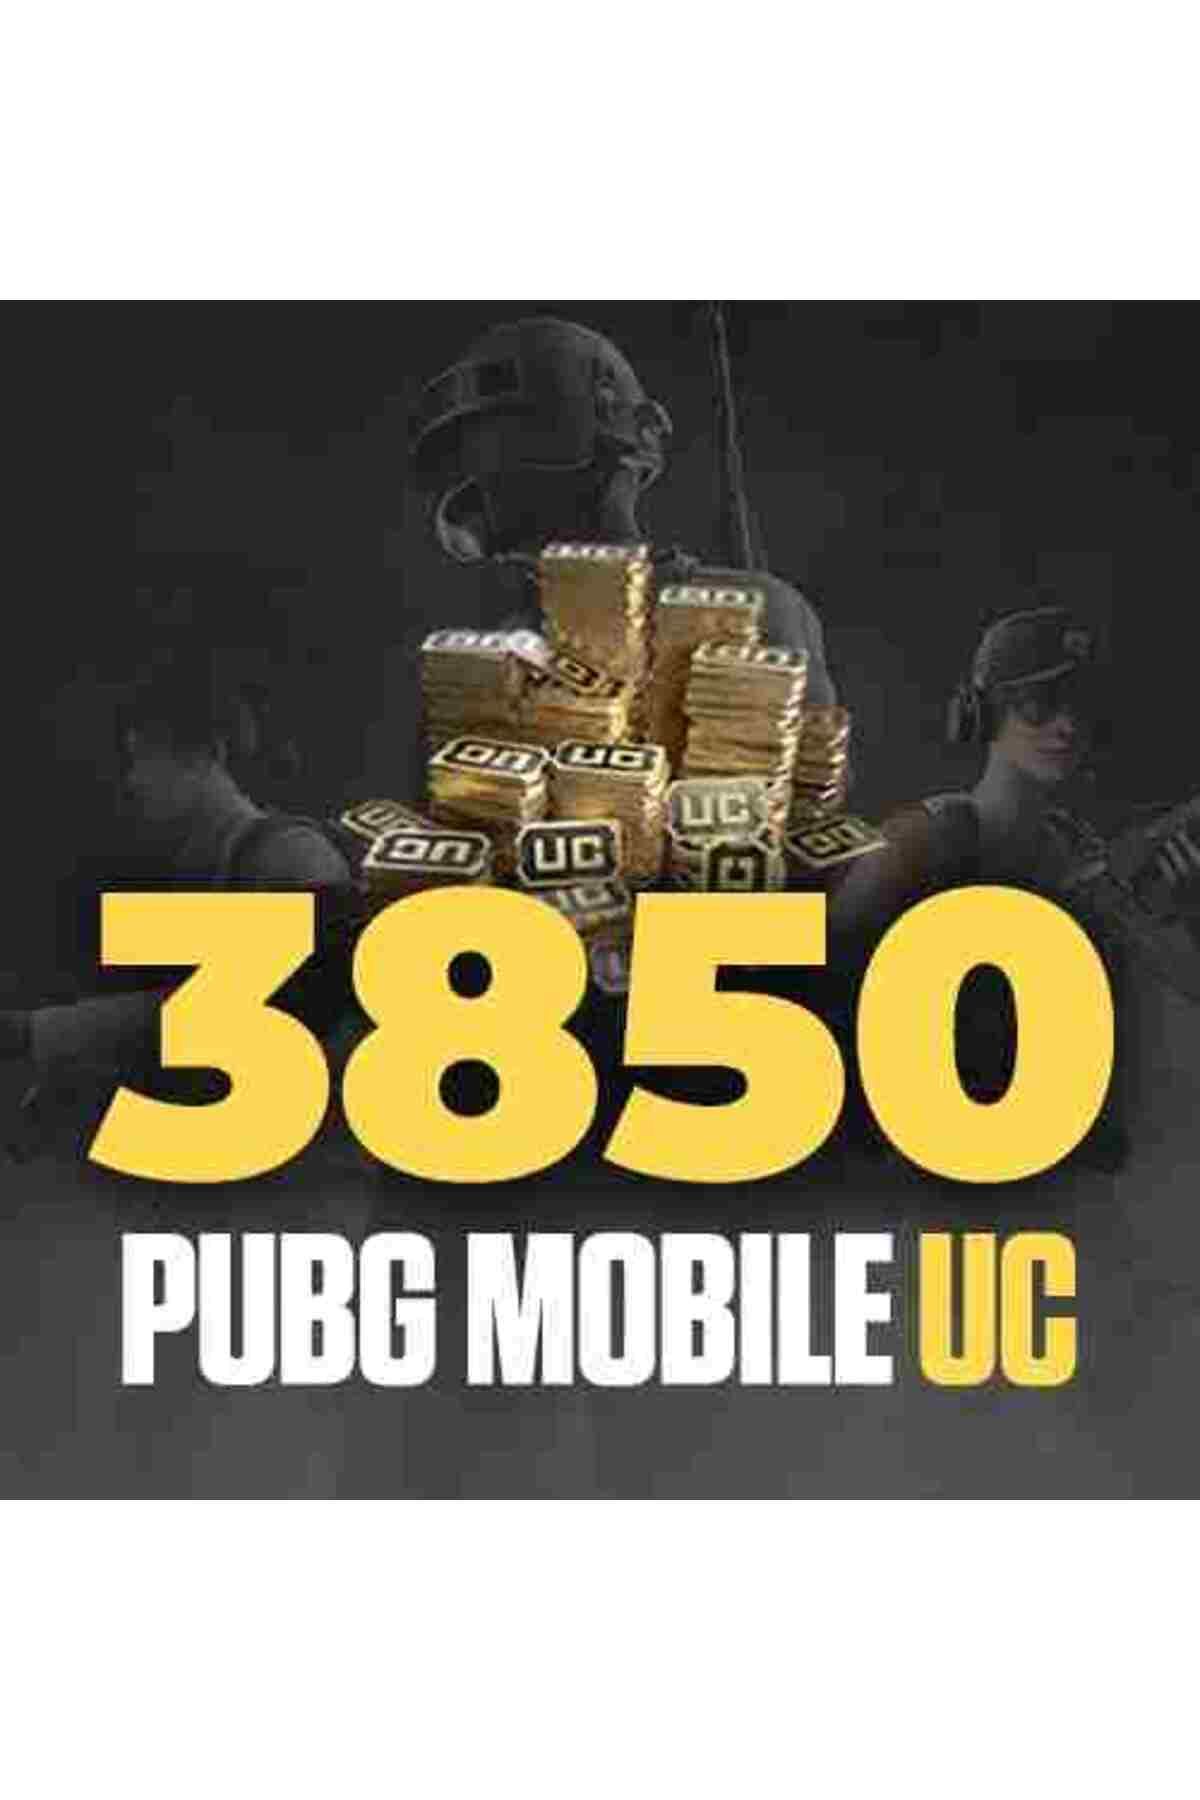 PUBG Mobile 3850 UC TR